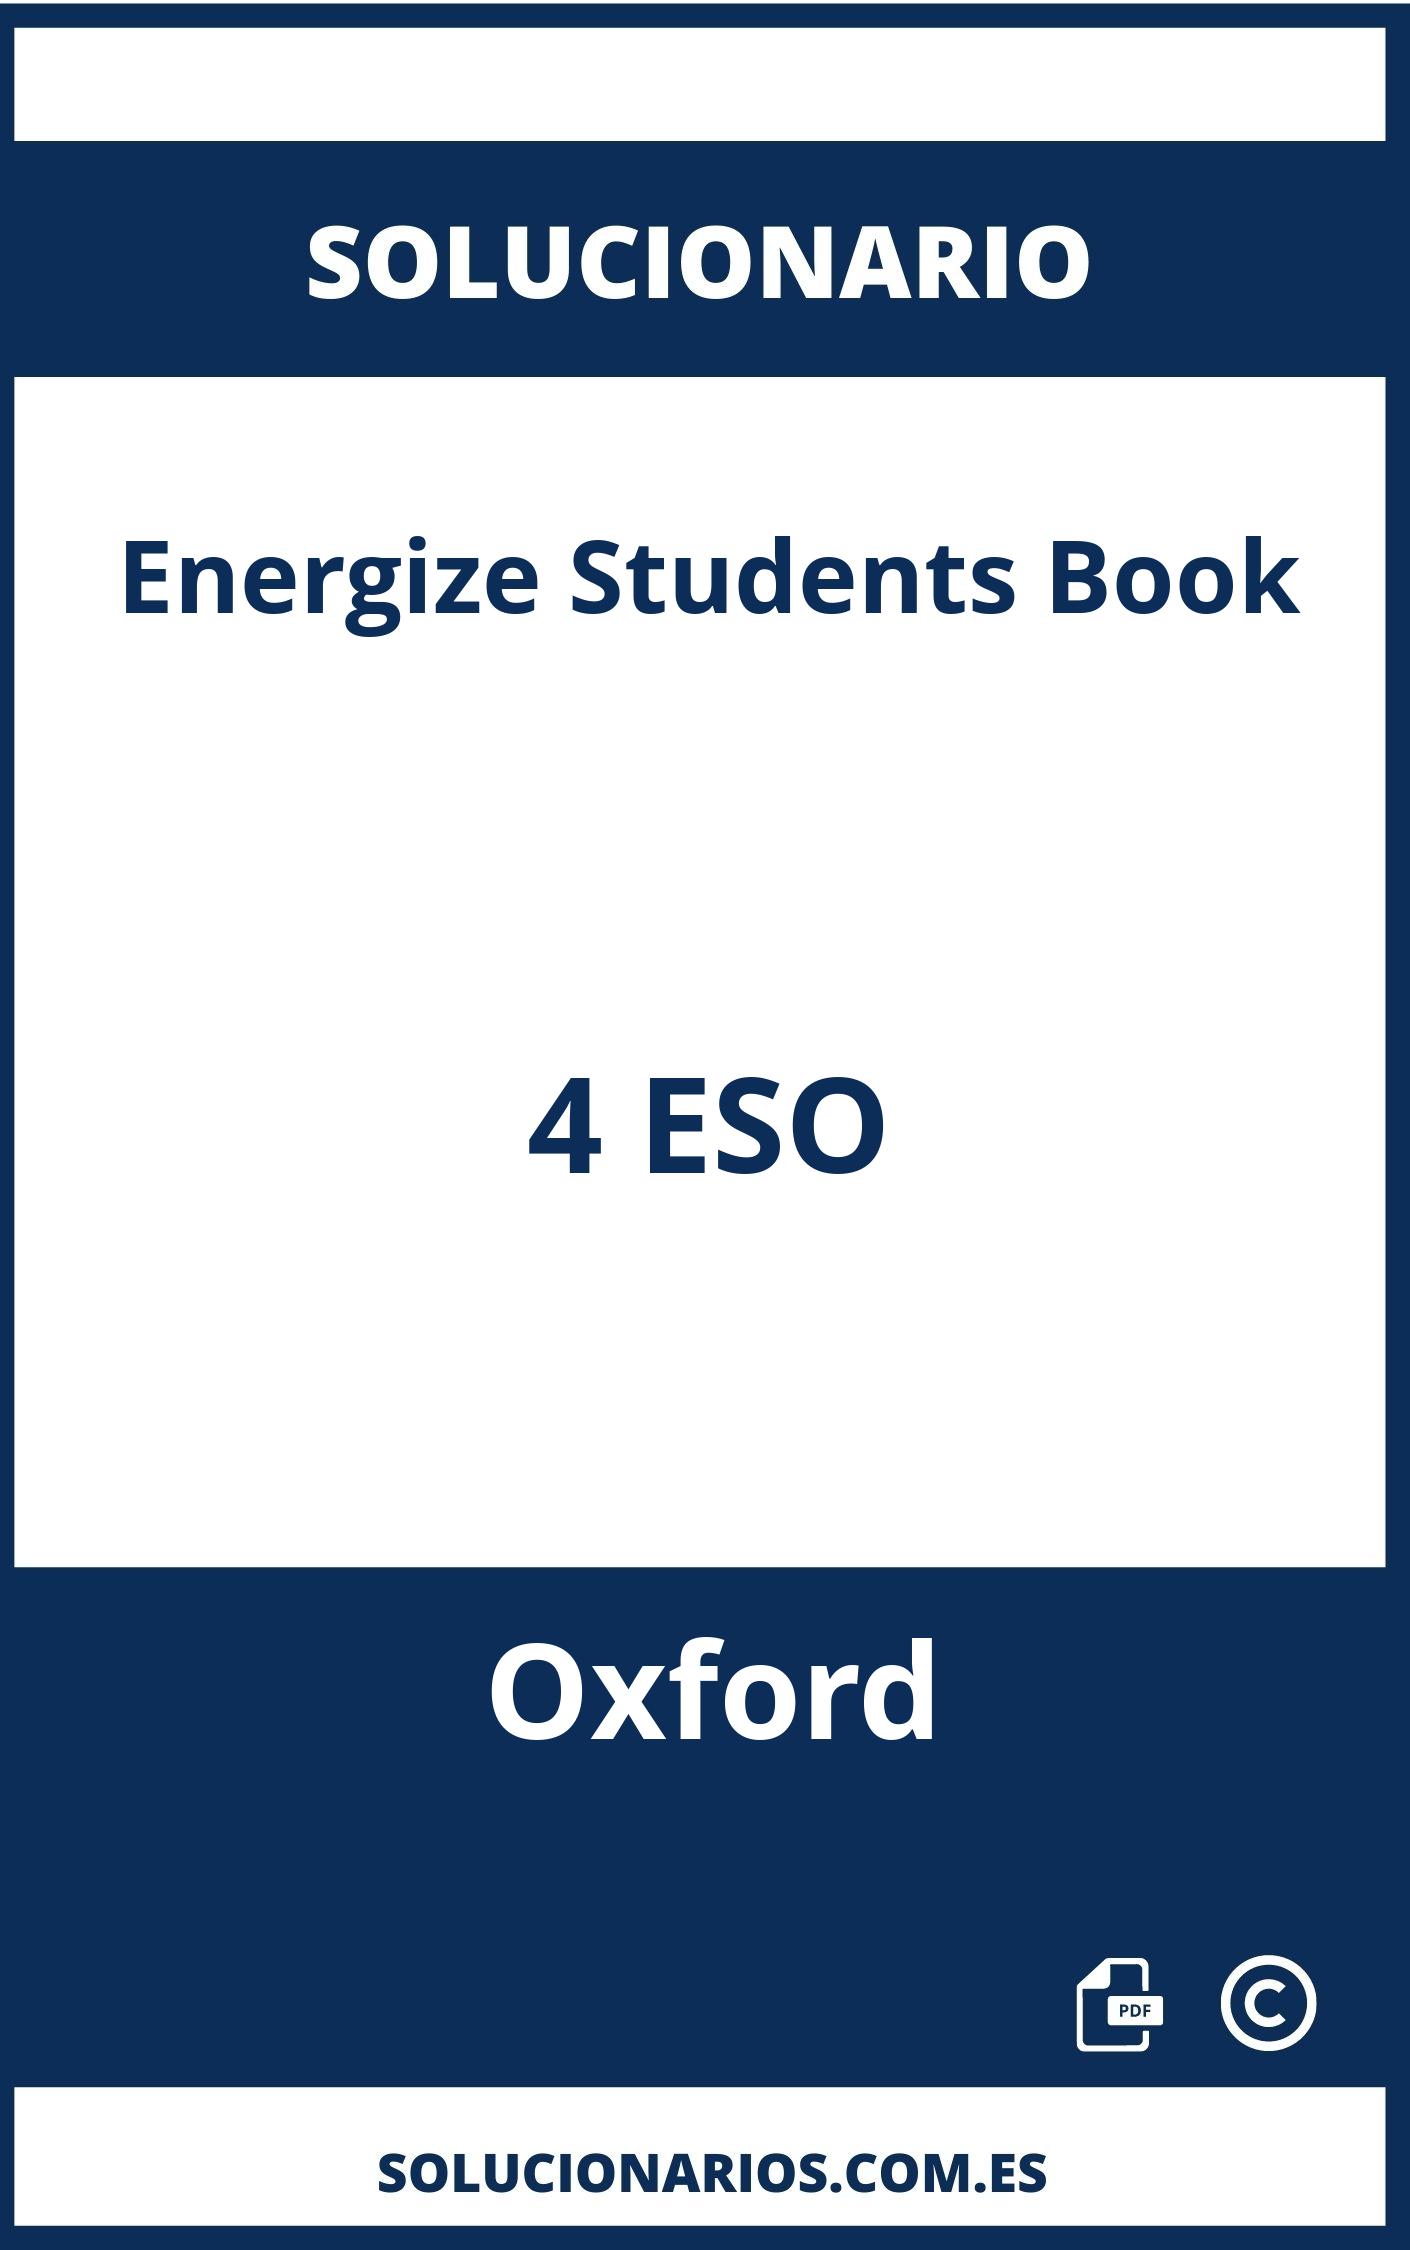 Solucionario Energize Students Book 4 ESO Oxford